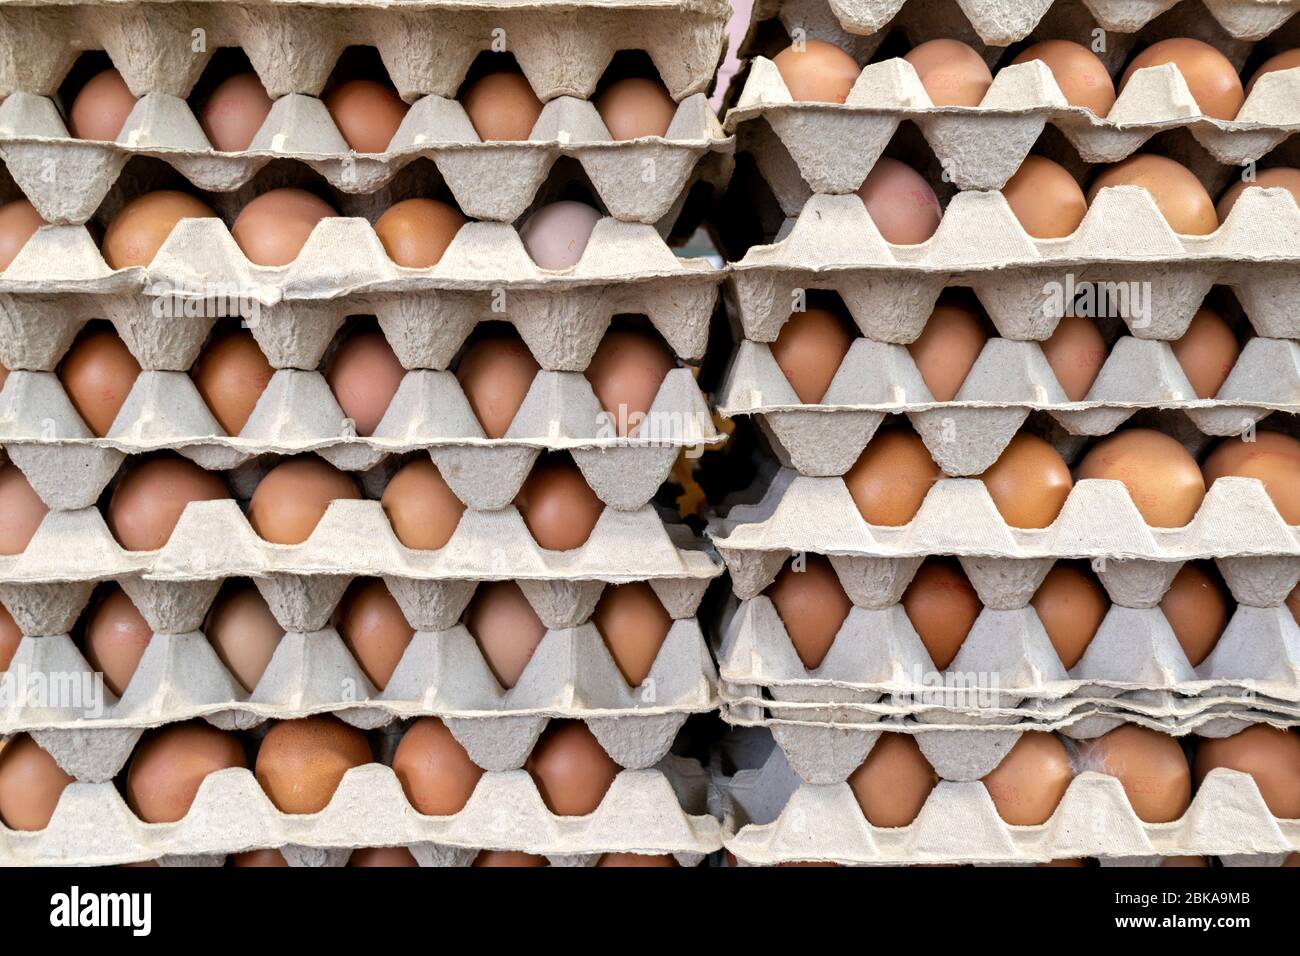 fresh eggs in carton at market Stock Photo